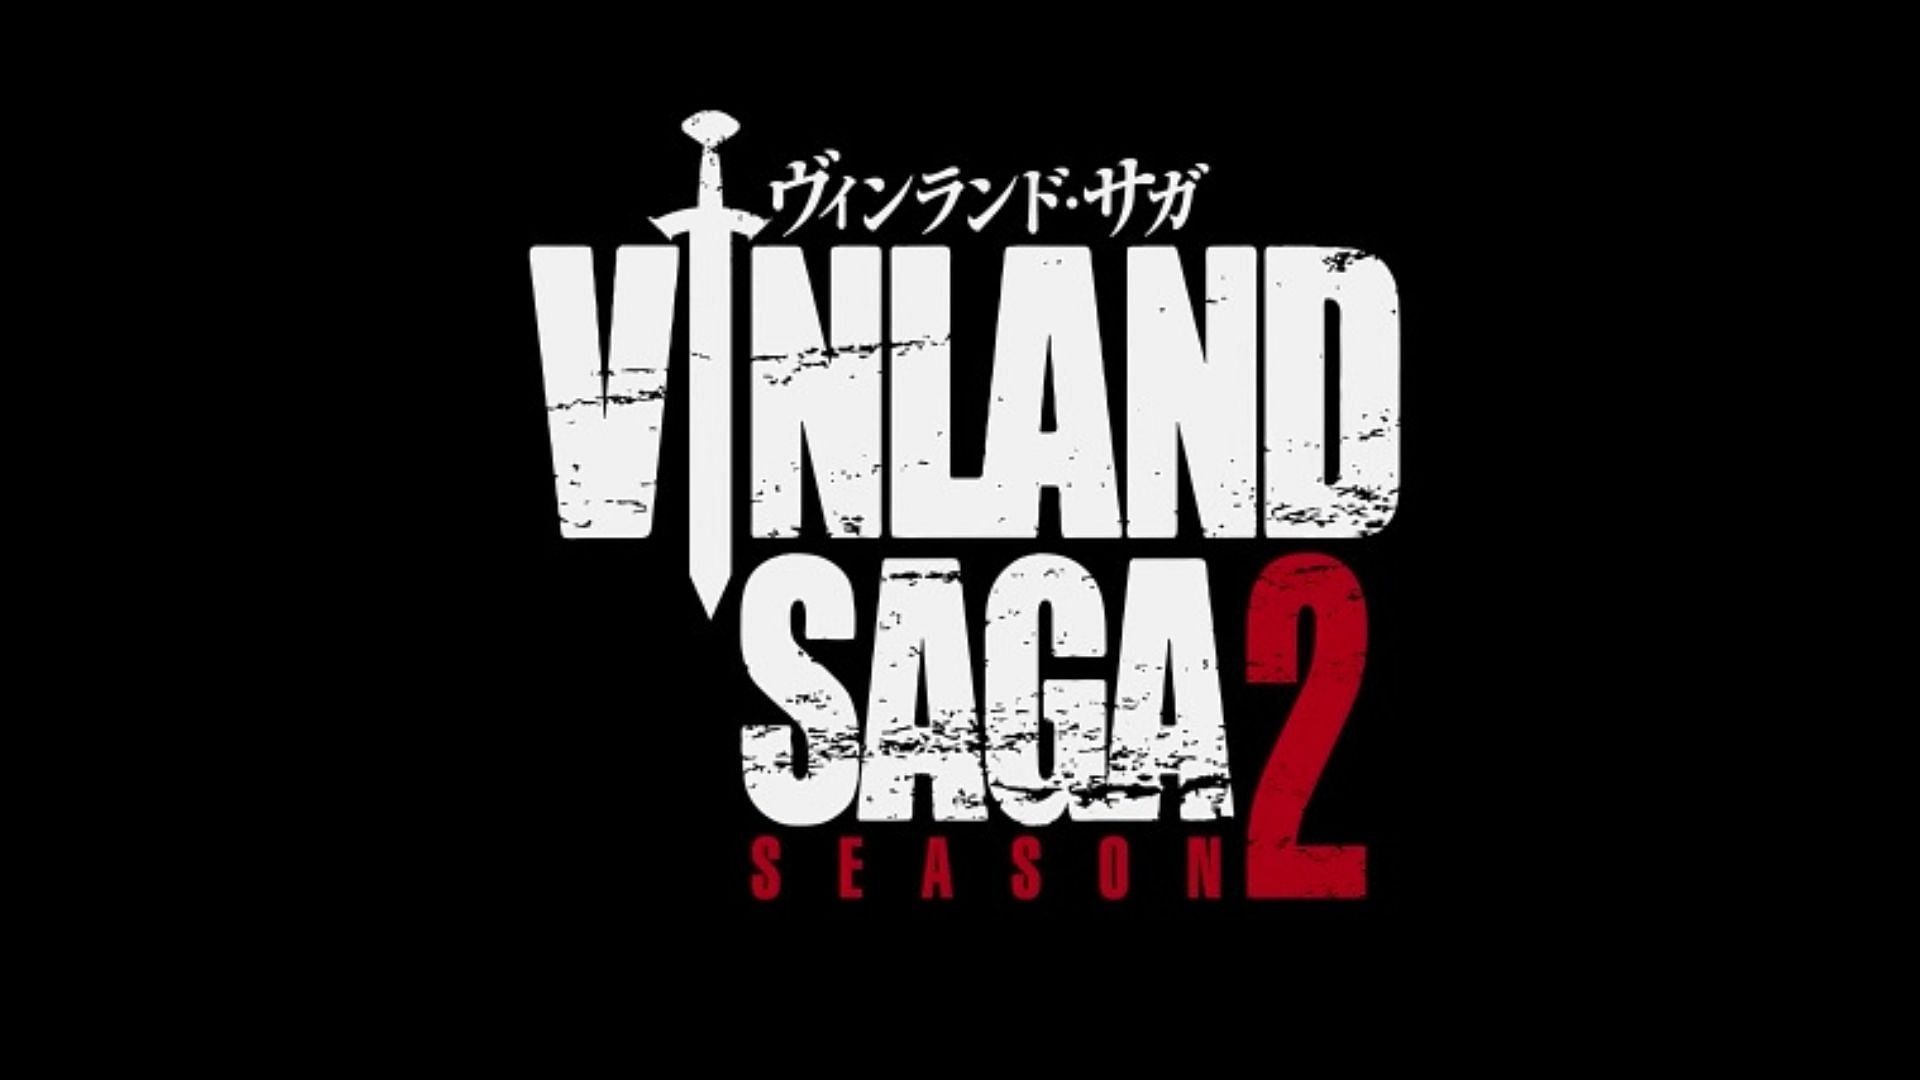 Vinland Saga season 2 release date, cast, trailer, plot, and more